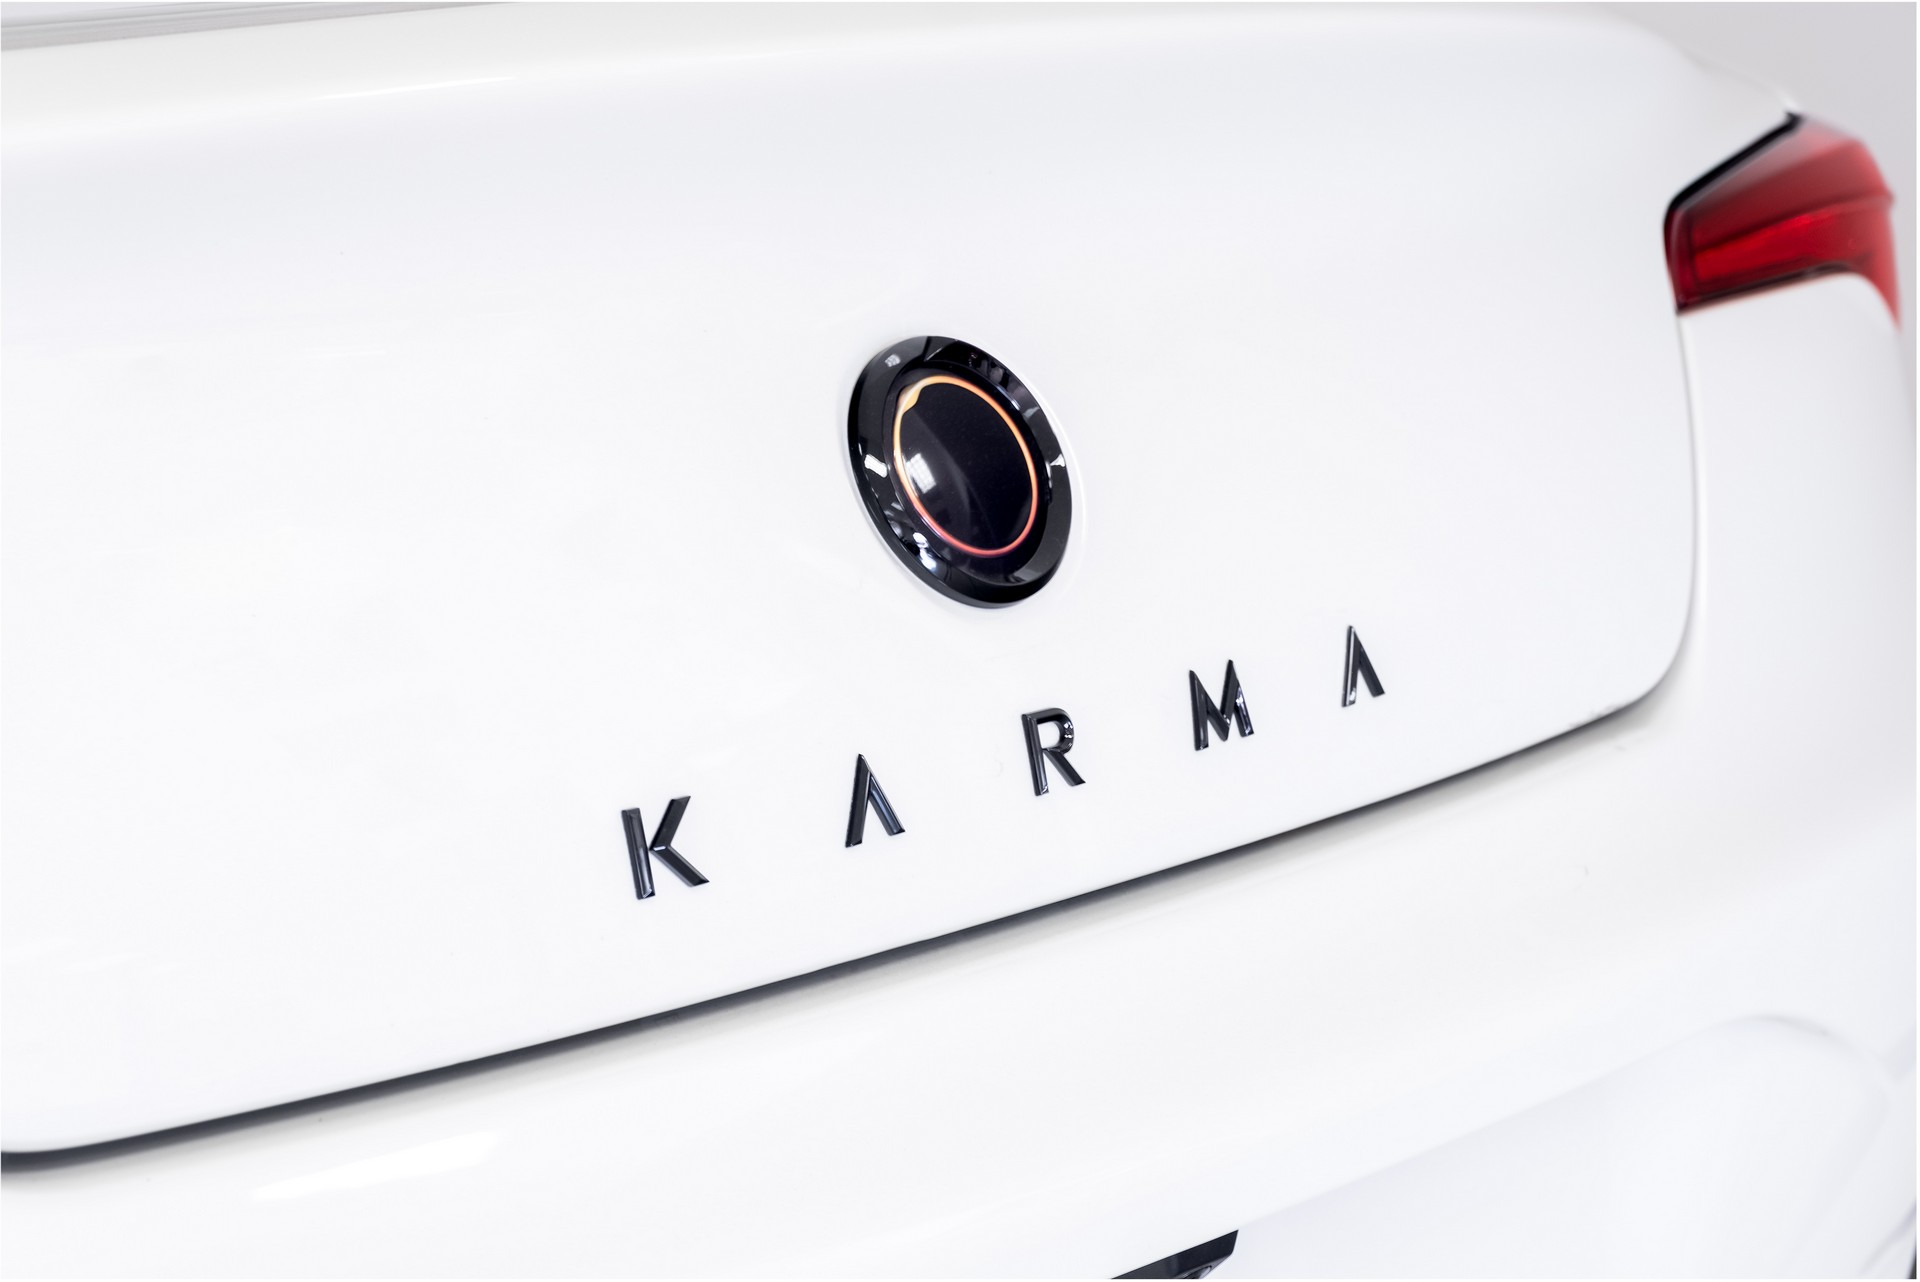 Karma GS-6 resim galerisi (23.02.2021)